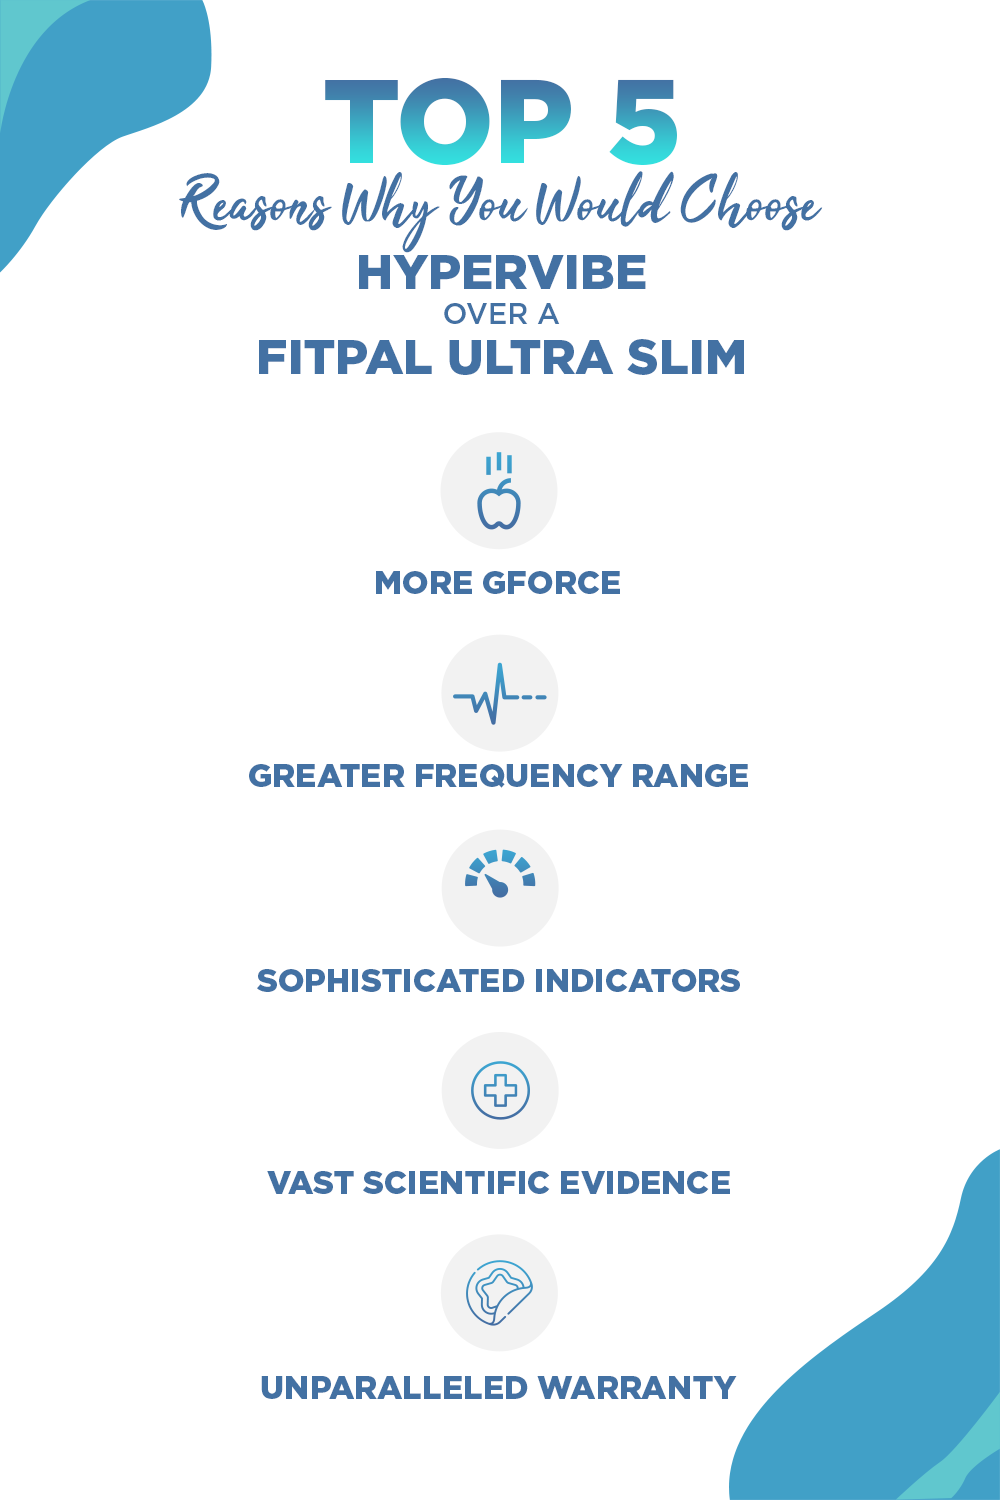 Hypervibe benefits vs fitpal ultra slim